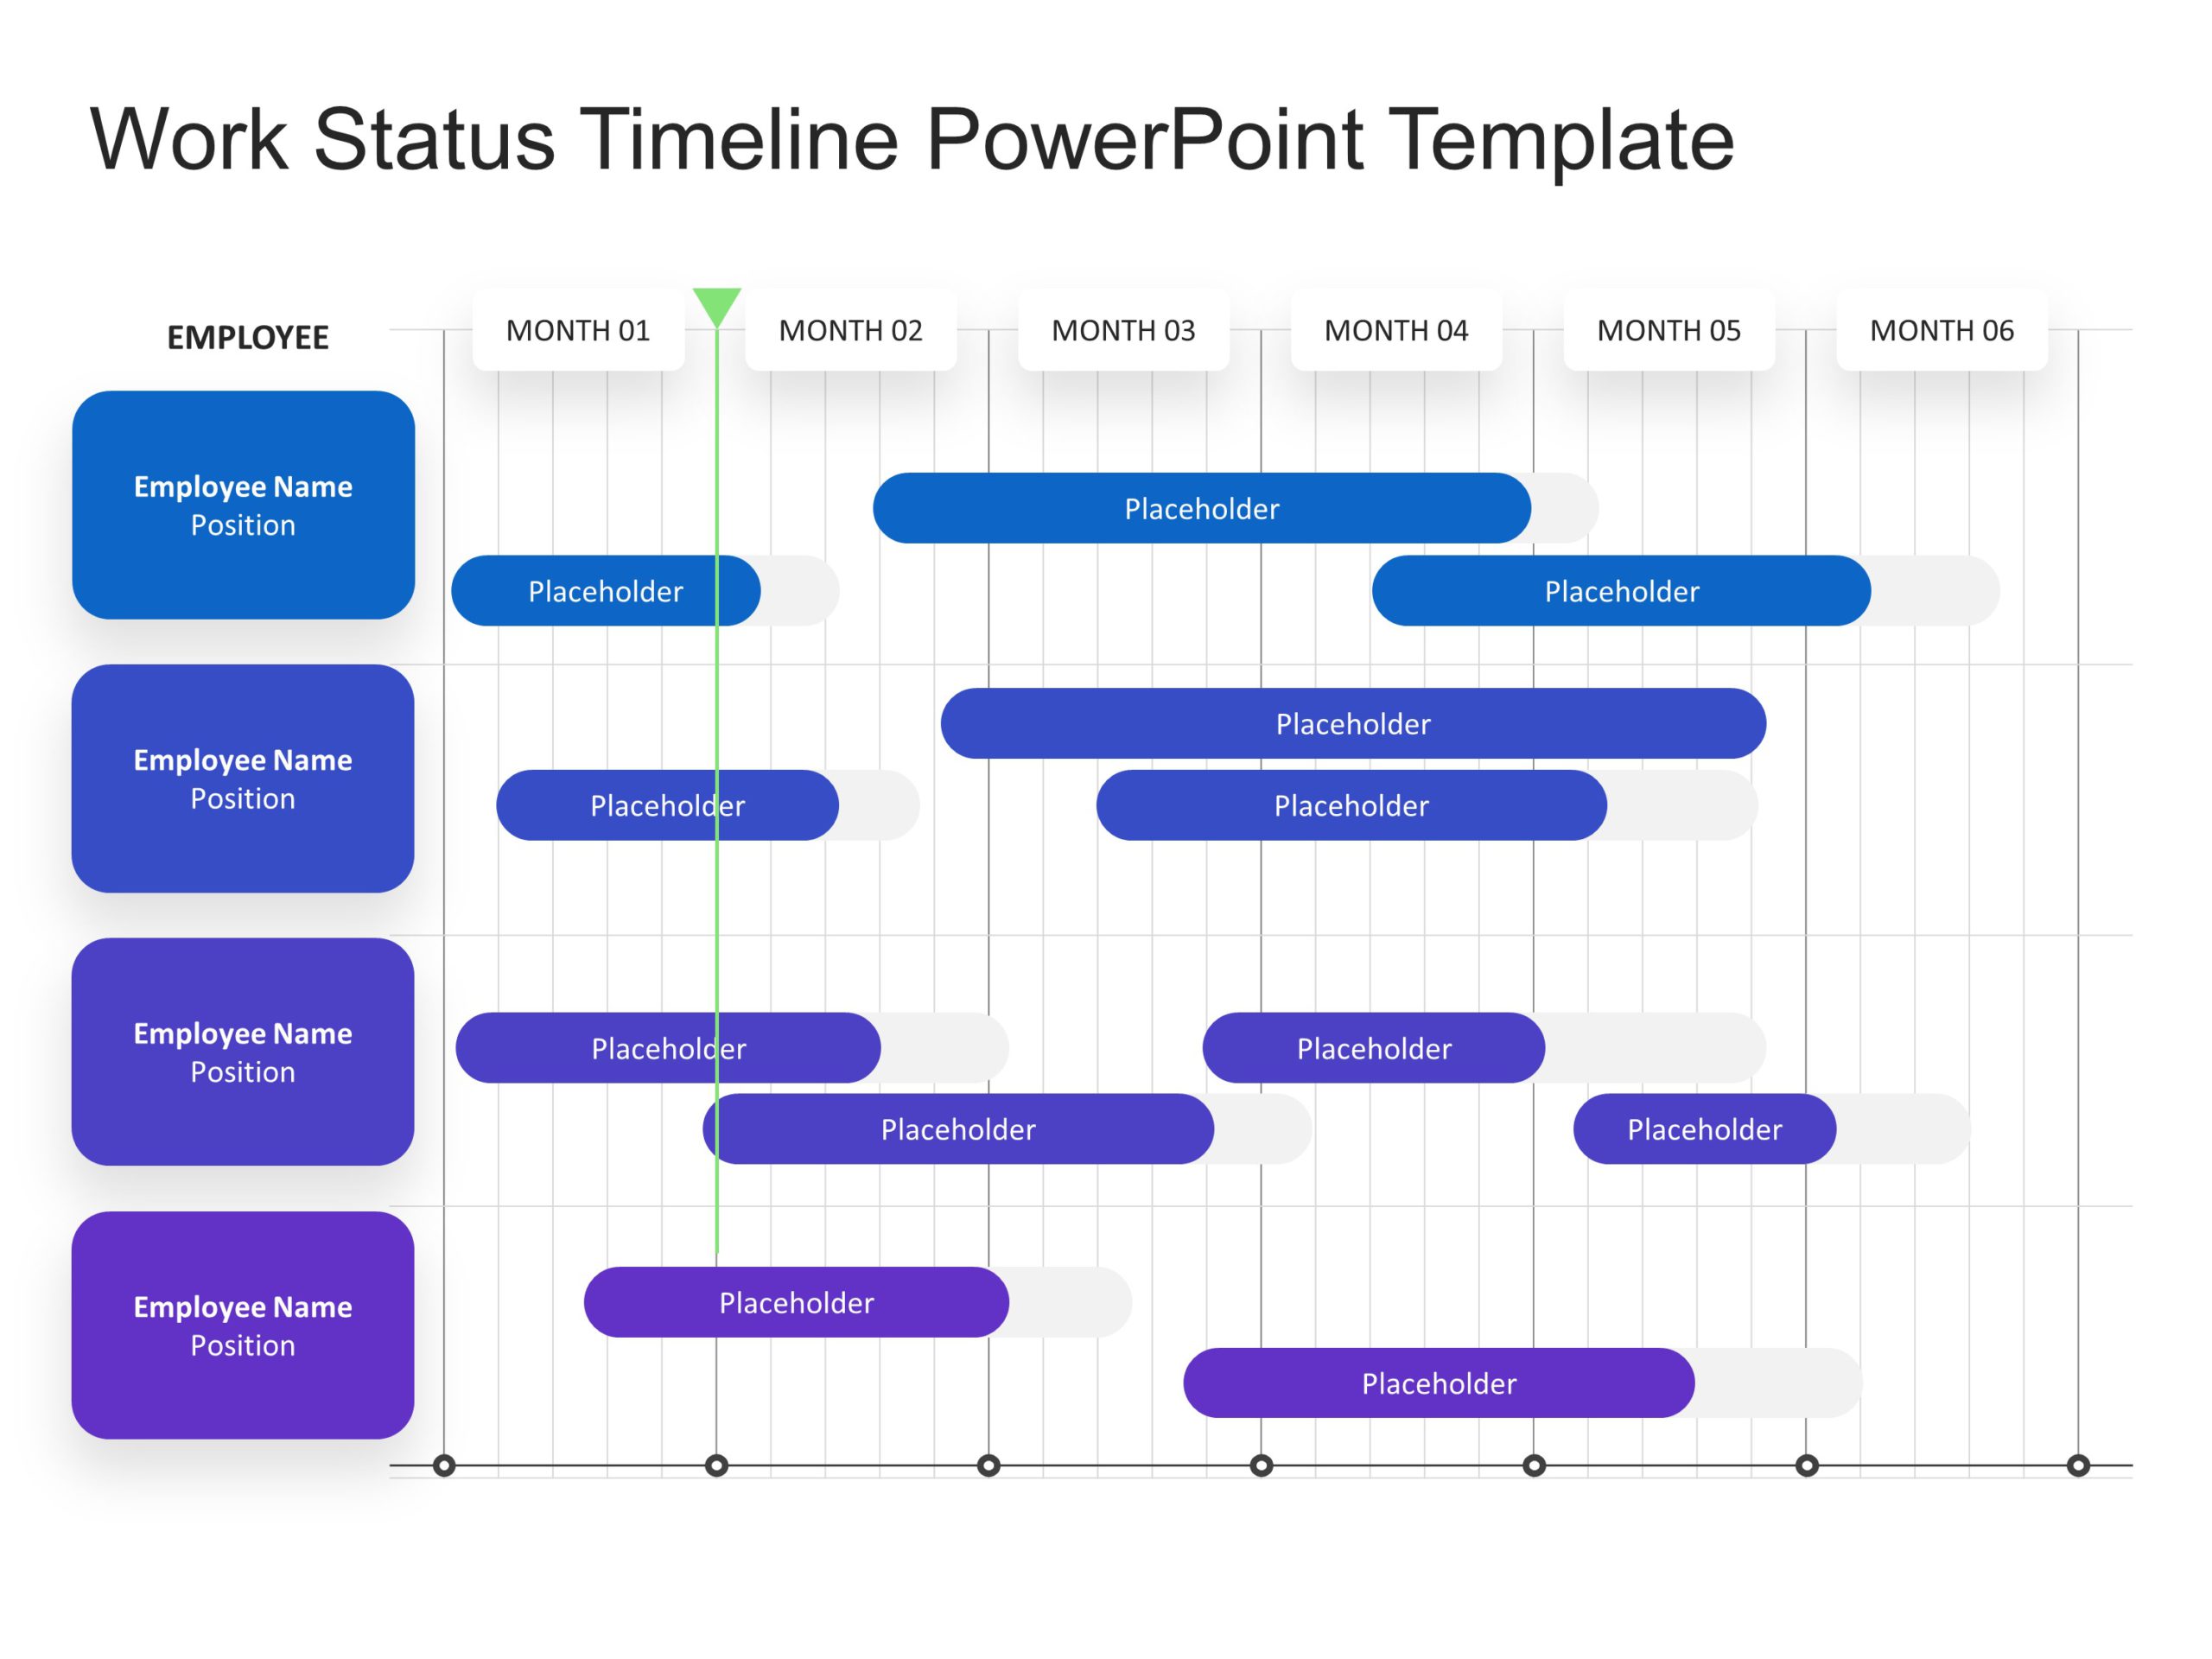 Roadmap Templates For PowerPoint & Google Slides Theme